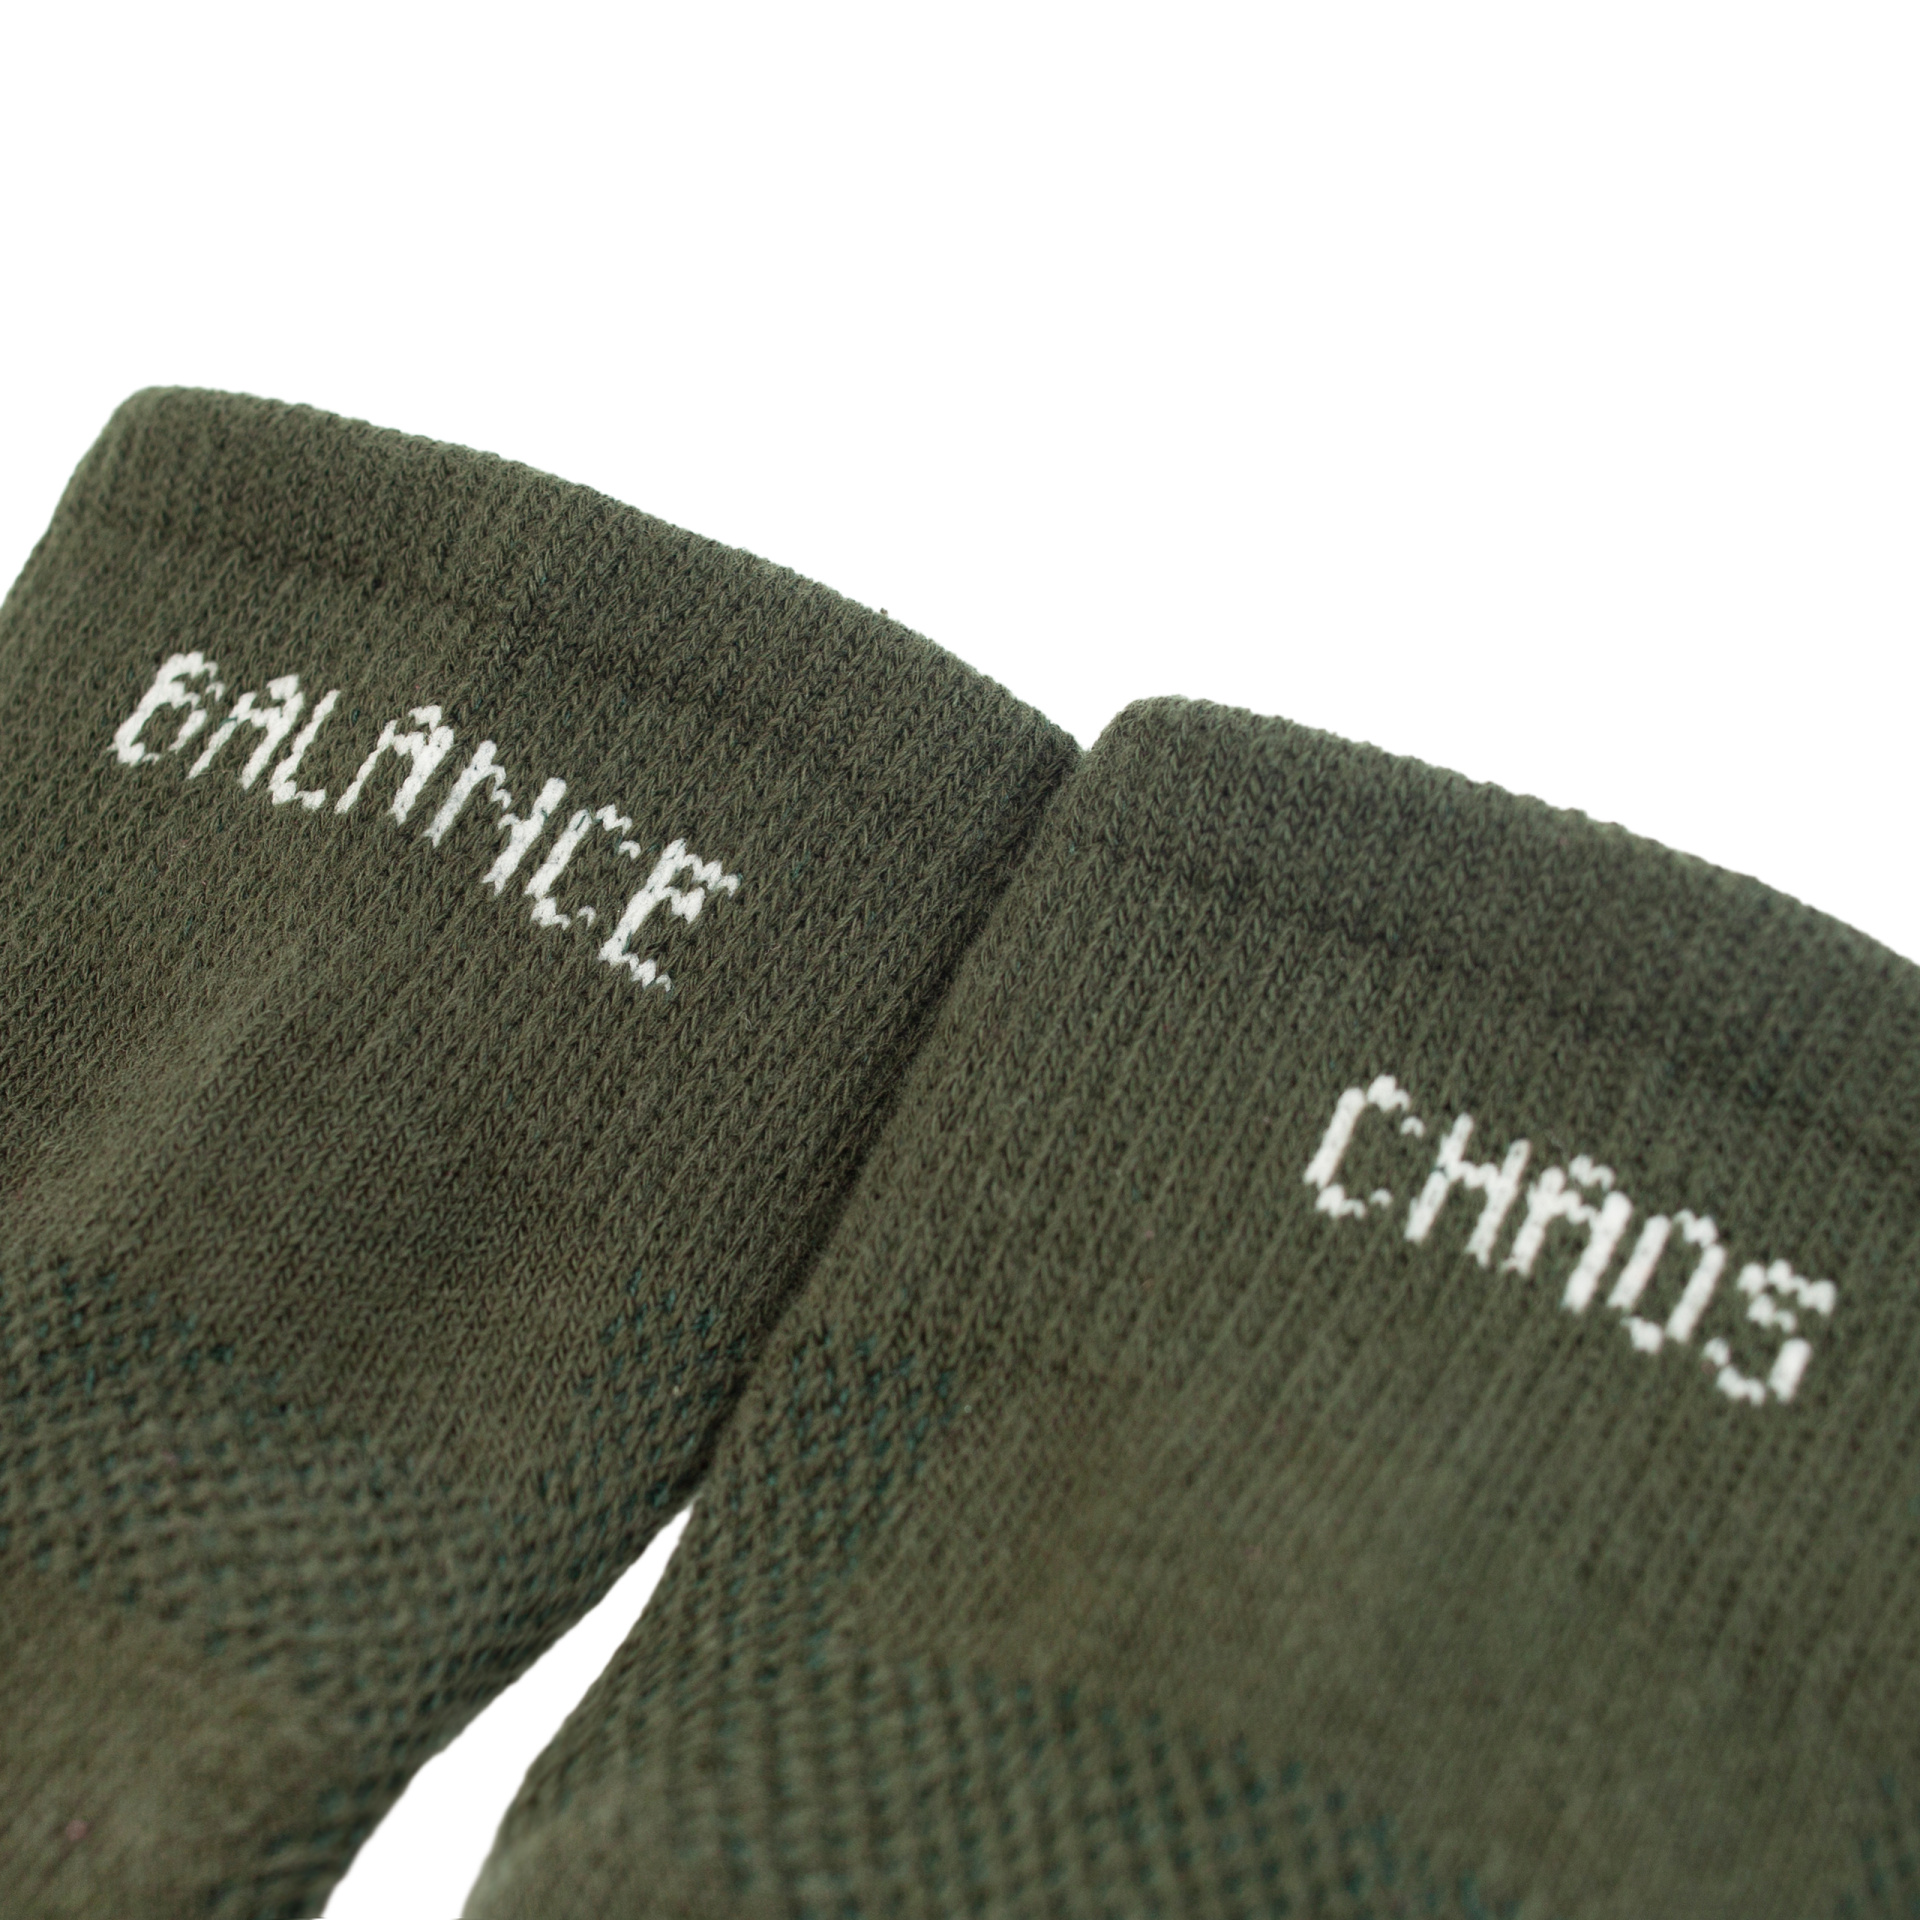 Undercover Khaki Chaos Balance Socks